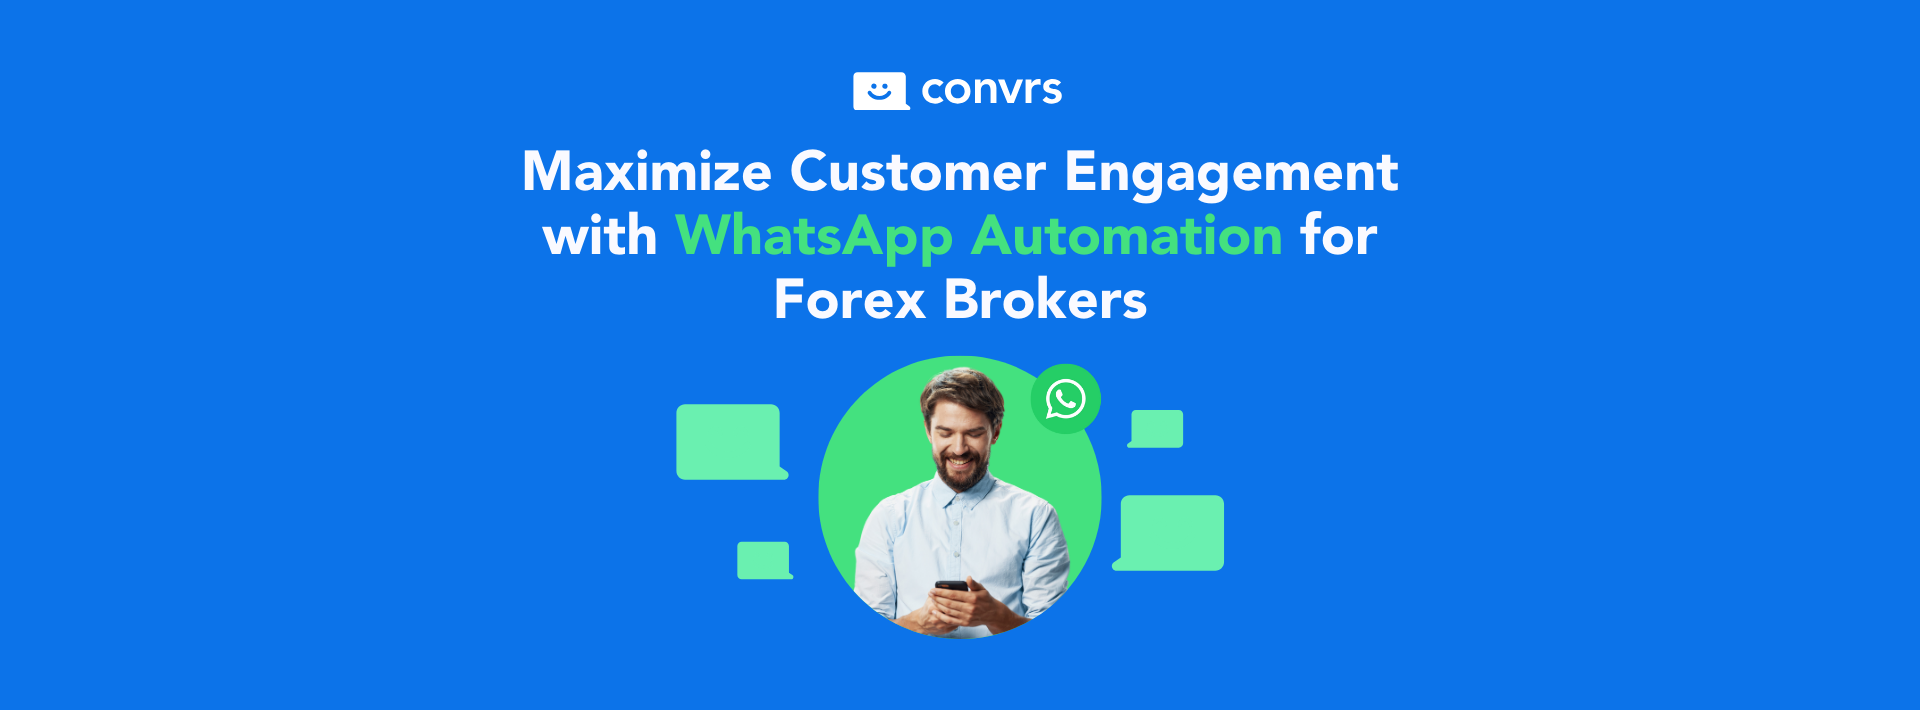 Forex Broker using WhatsApp Automation